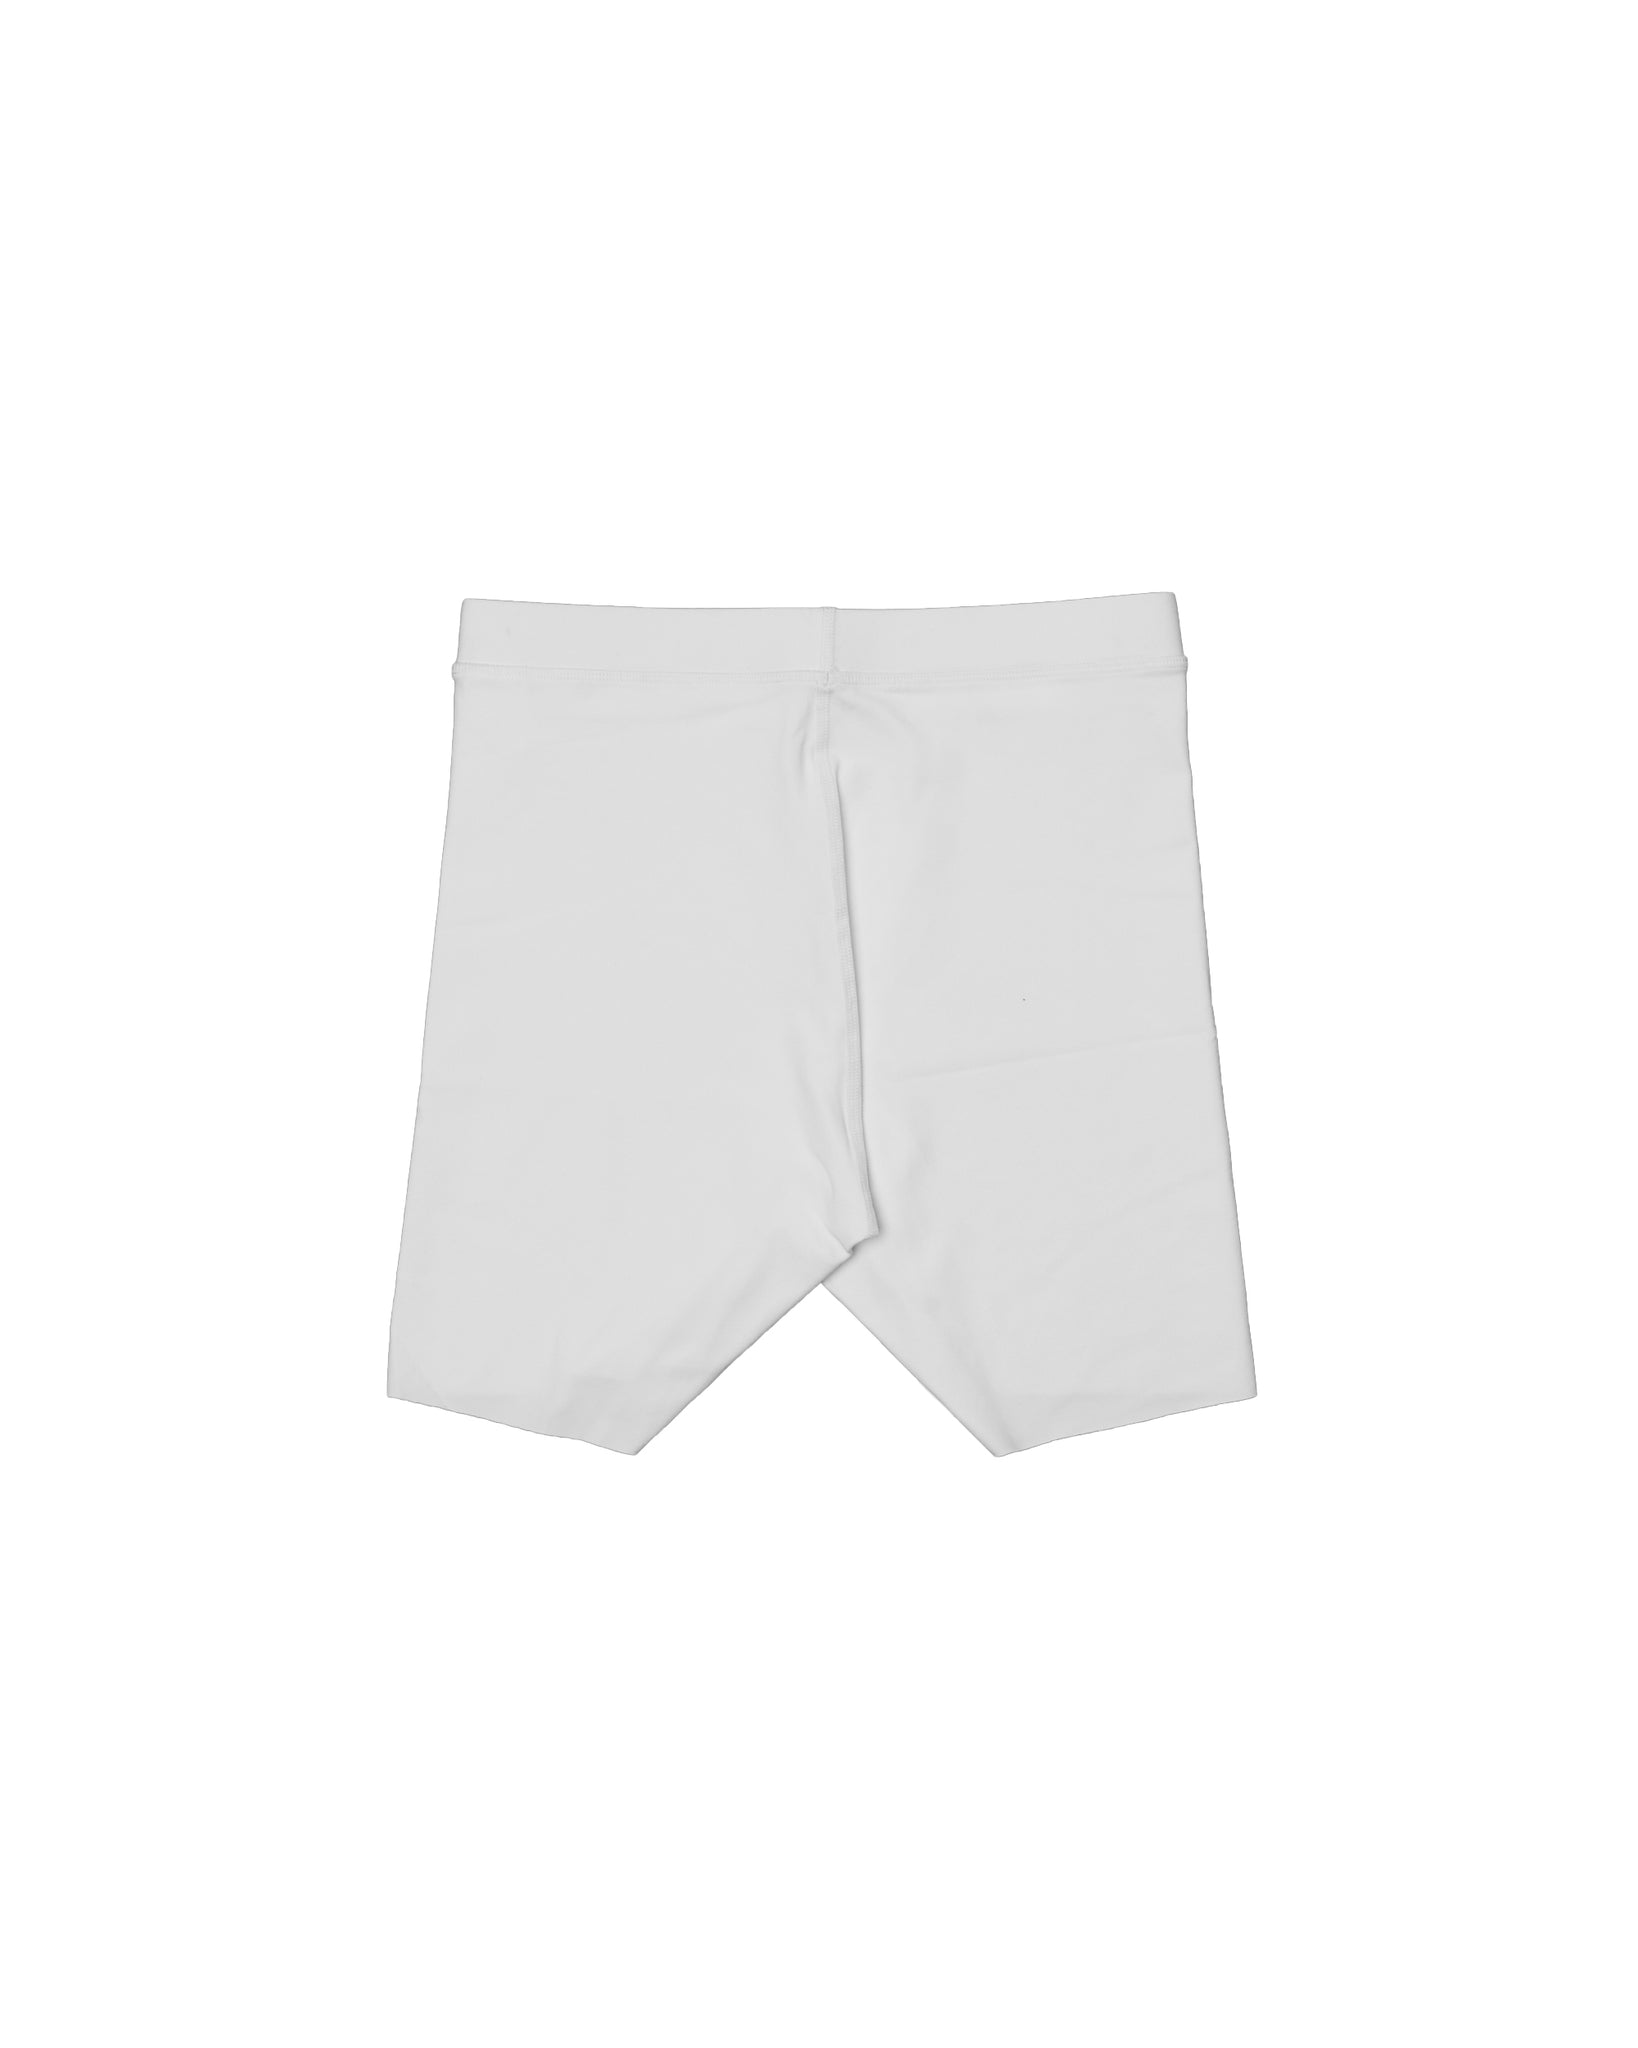 "Good Luck" Womens Biker Shorts (White)